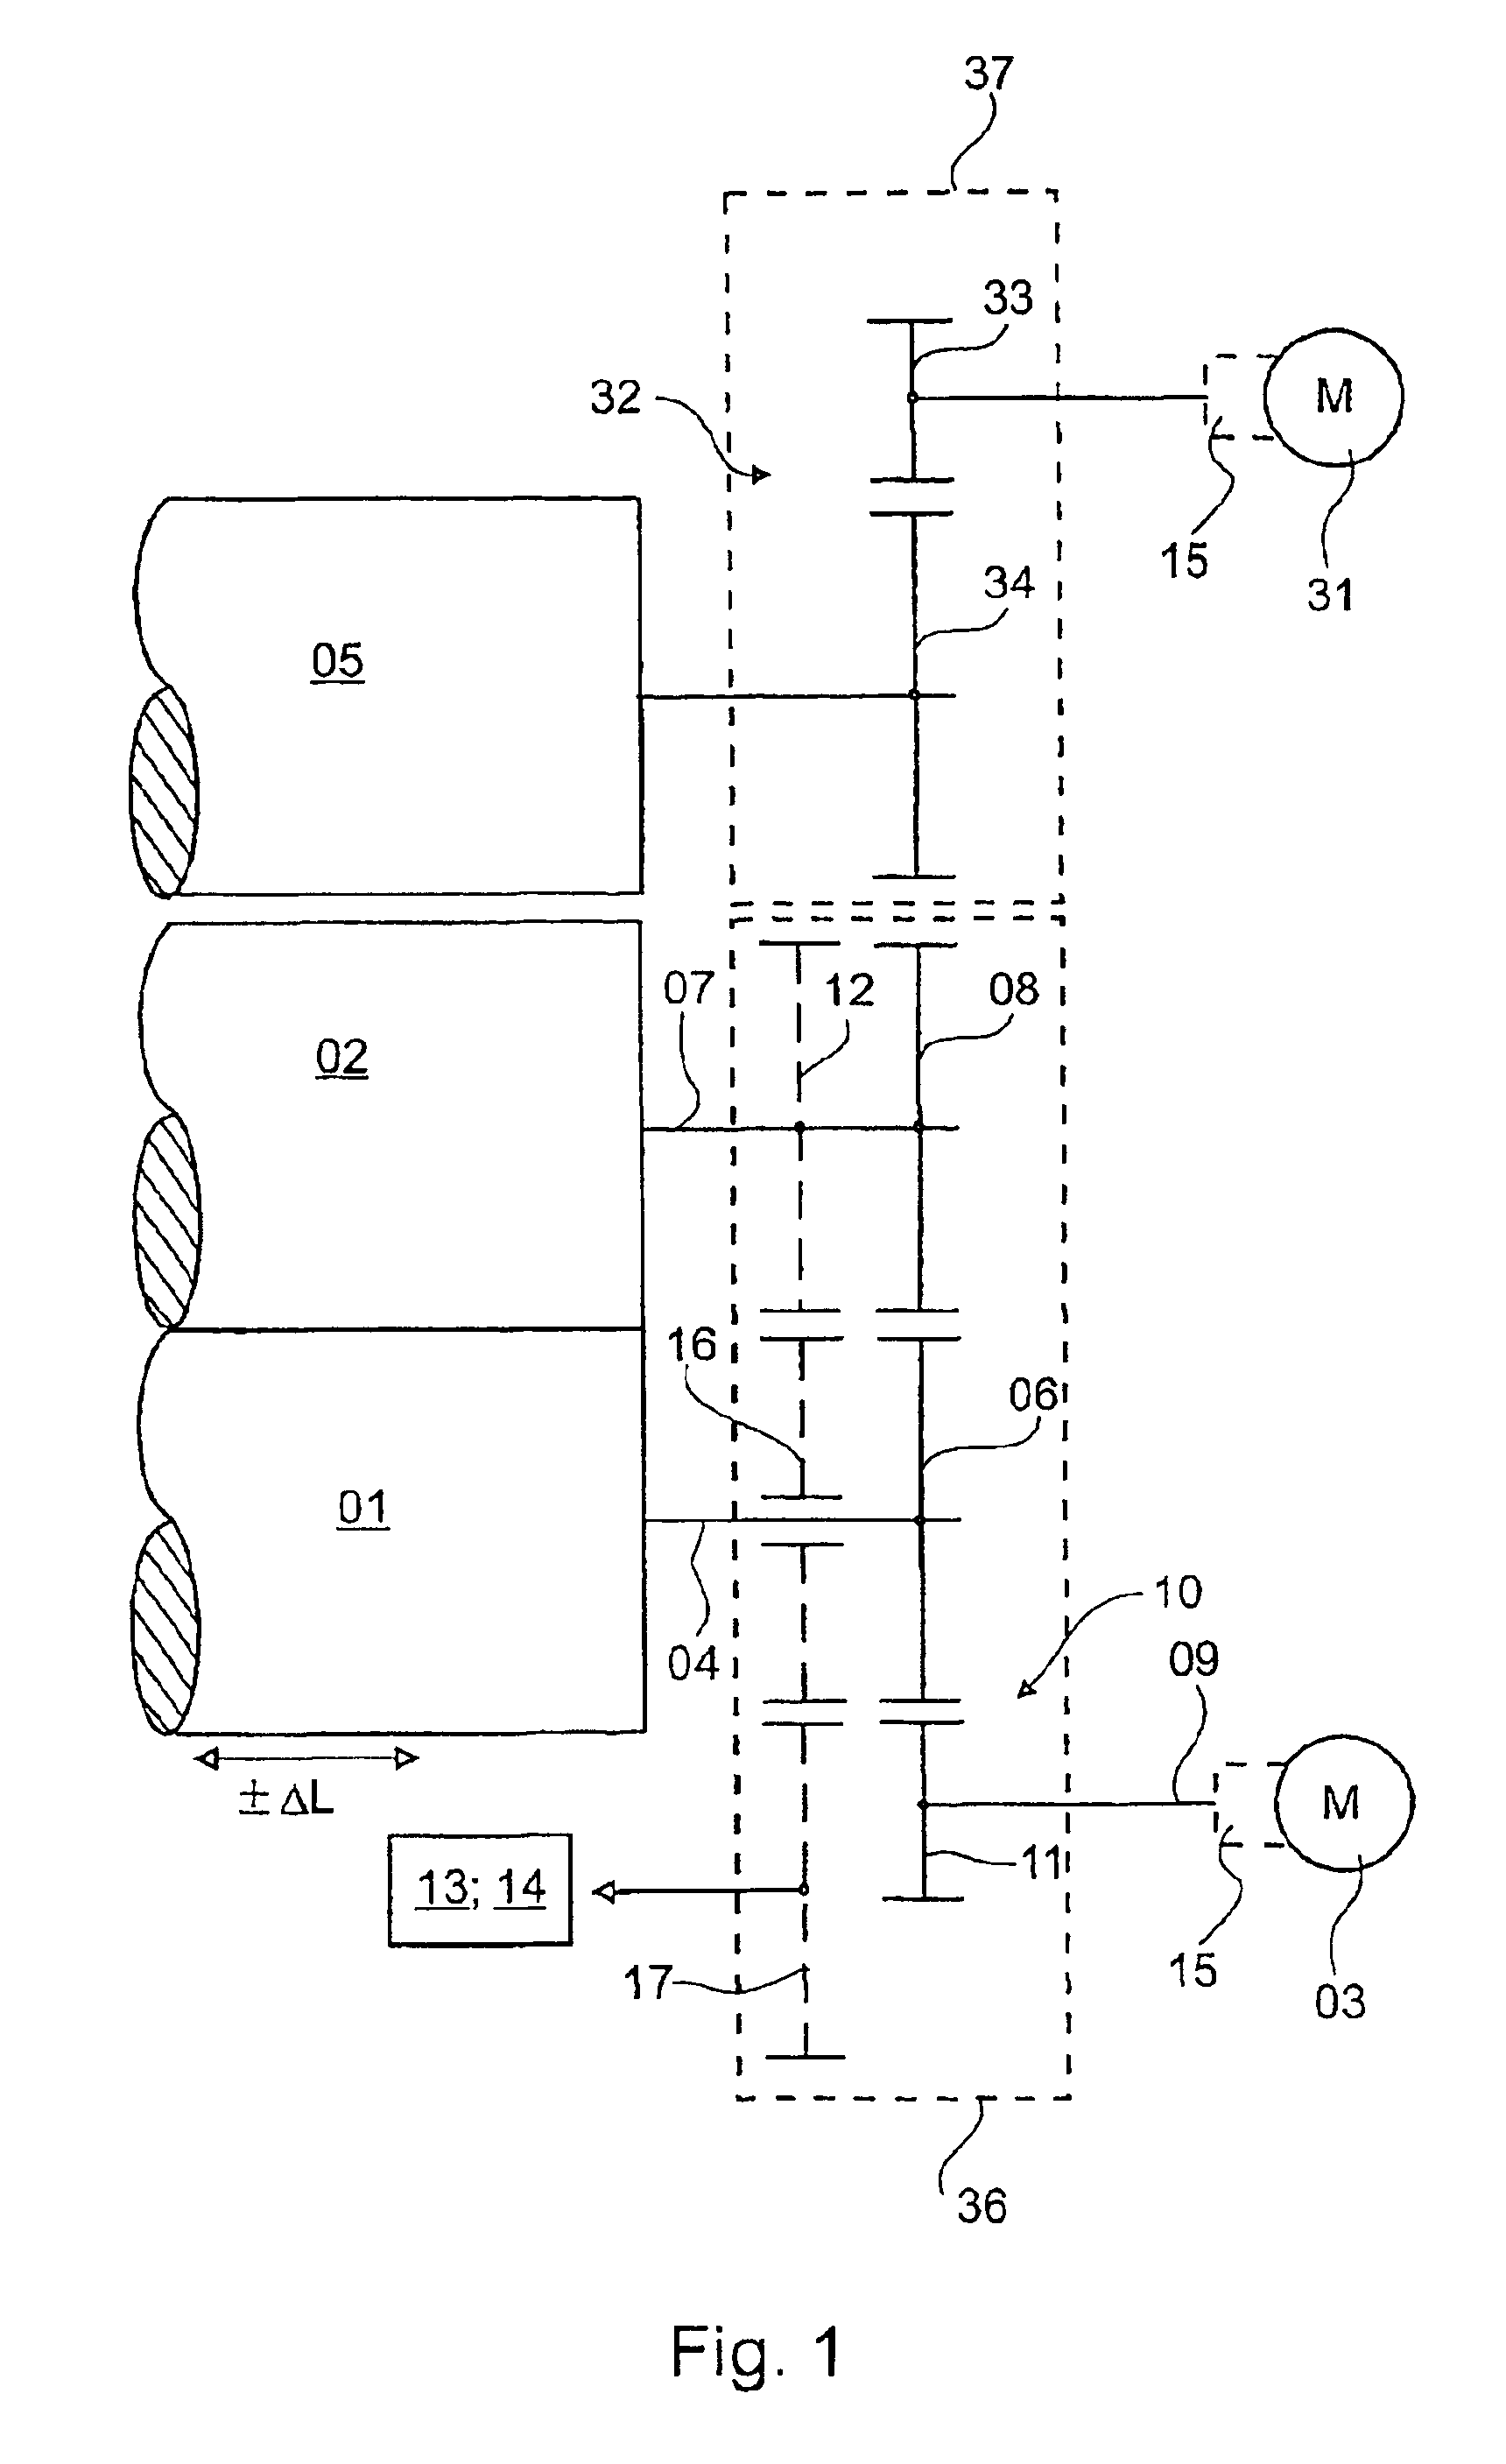 Drive mechanism of a printing unit